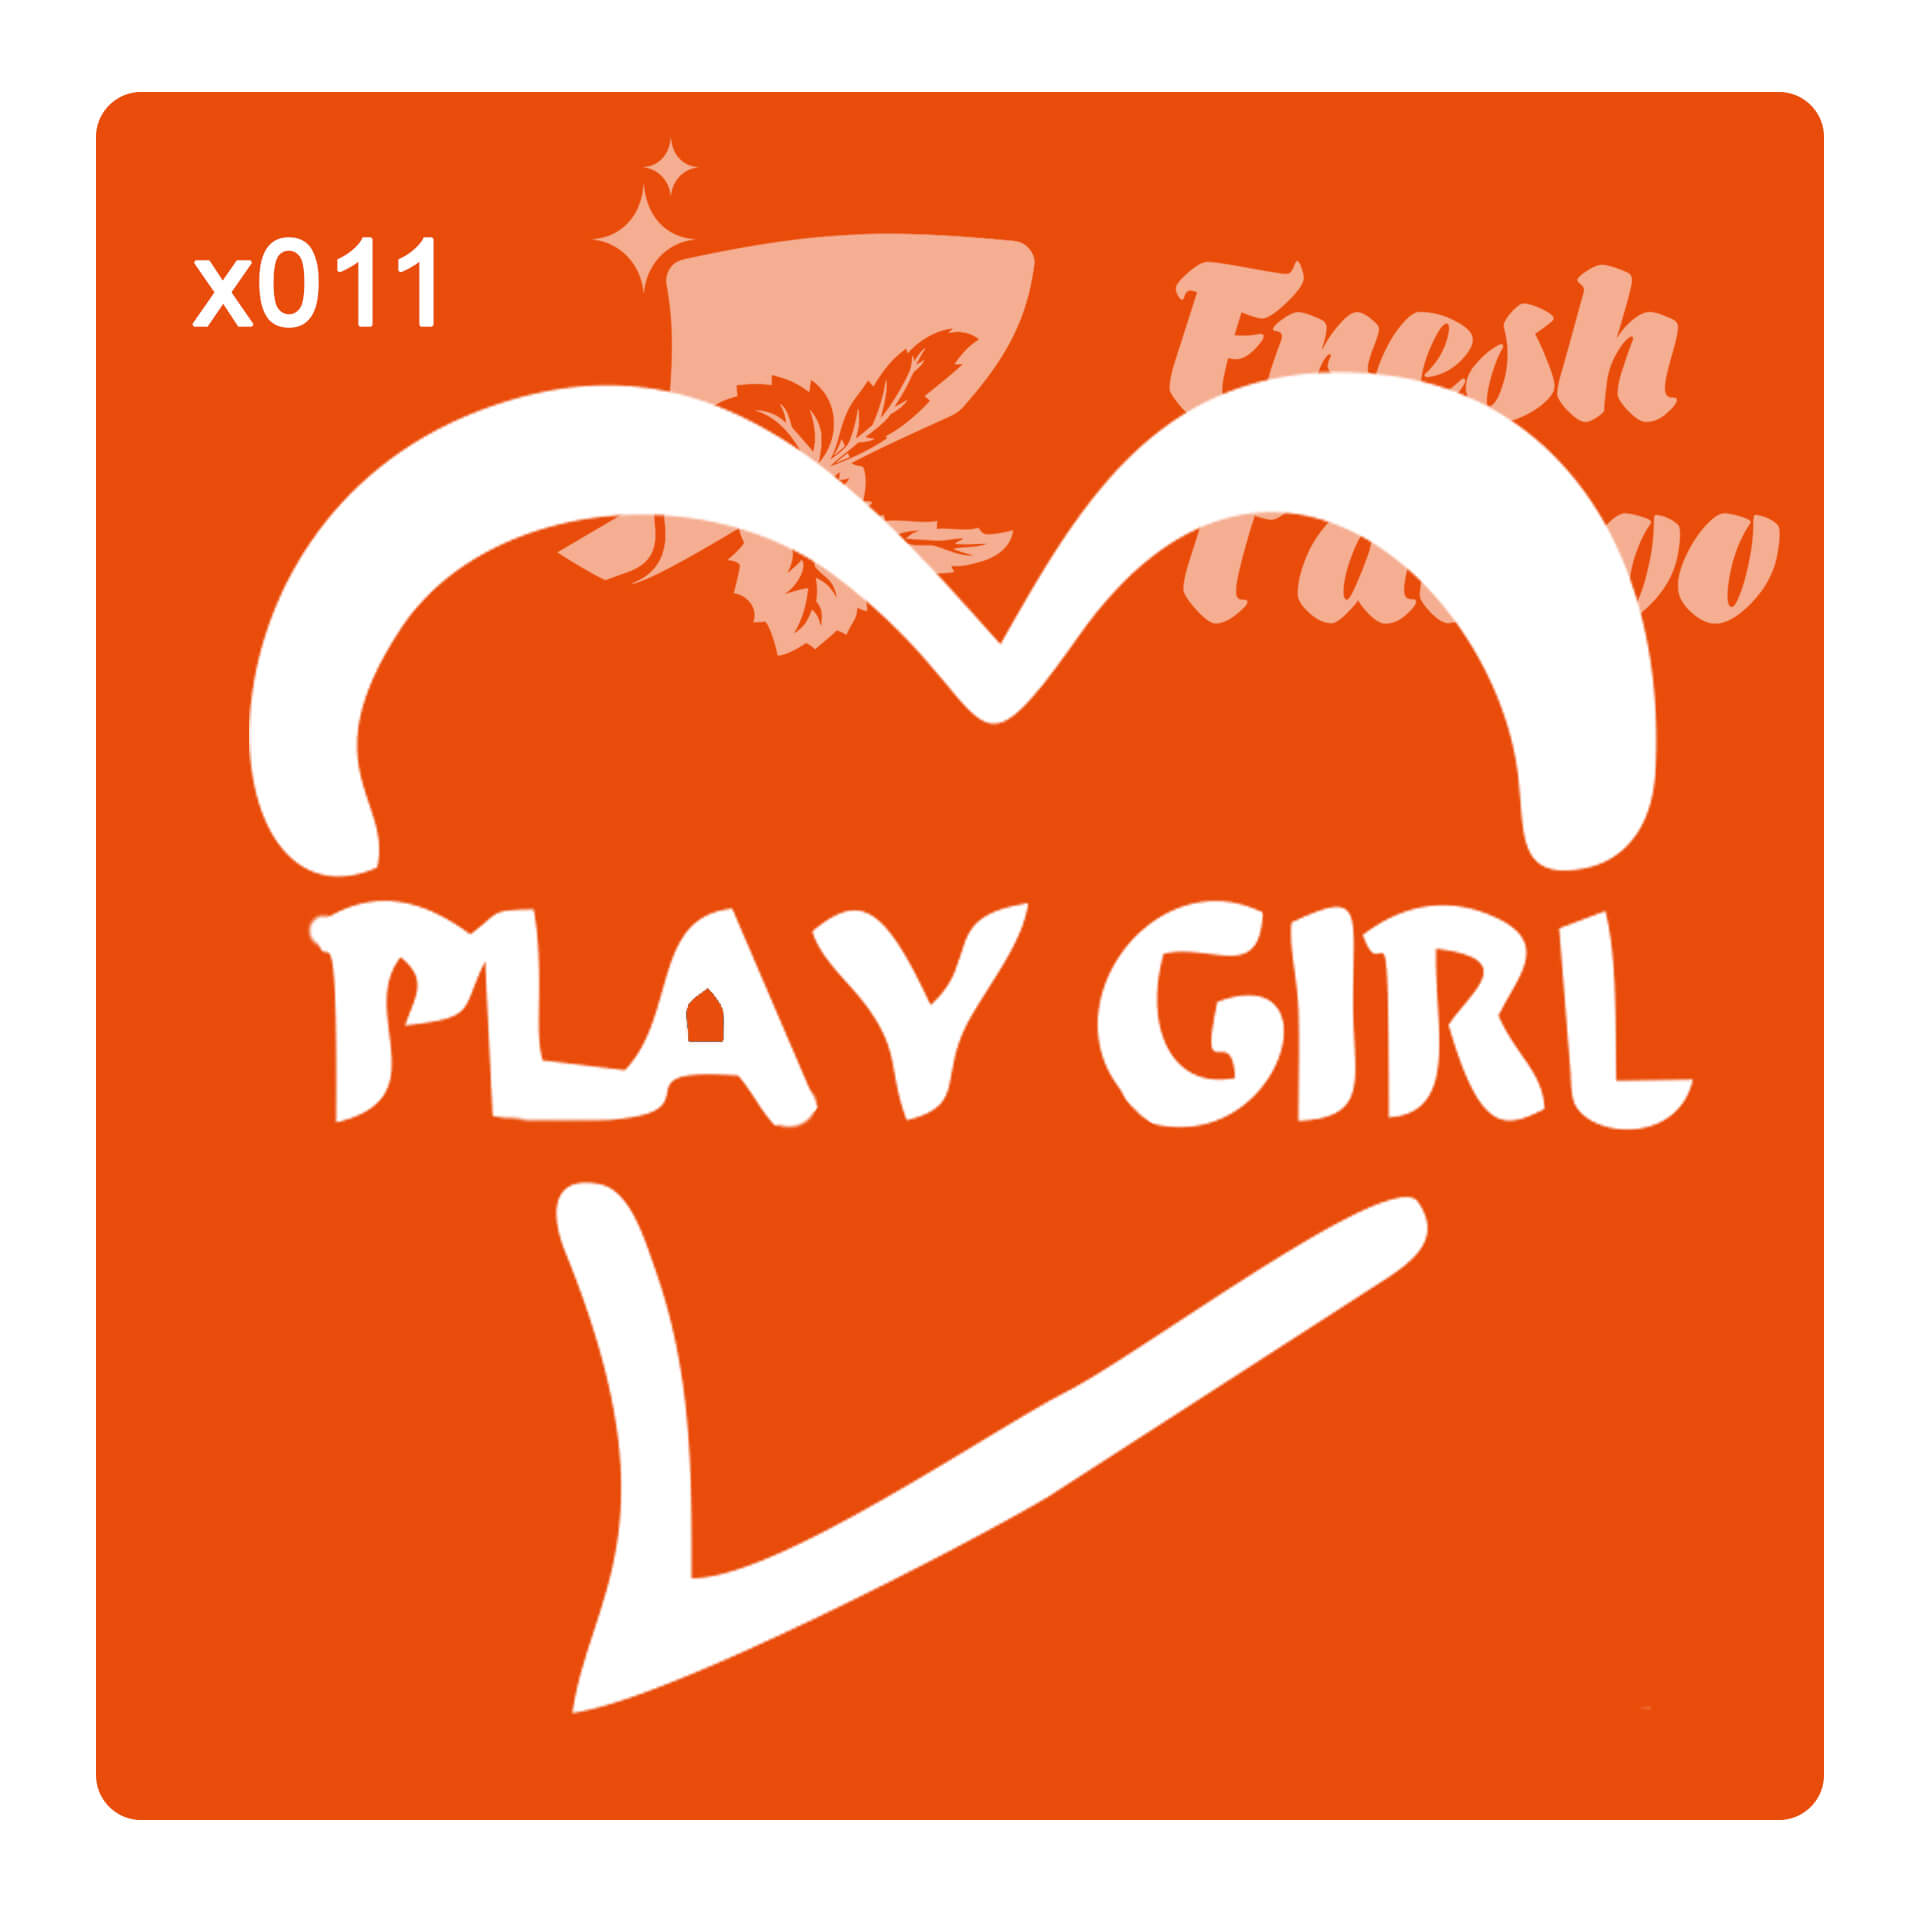 Play girl x011  